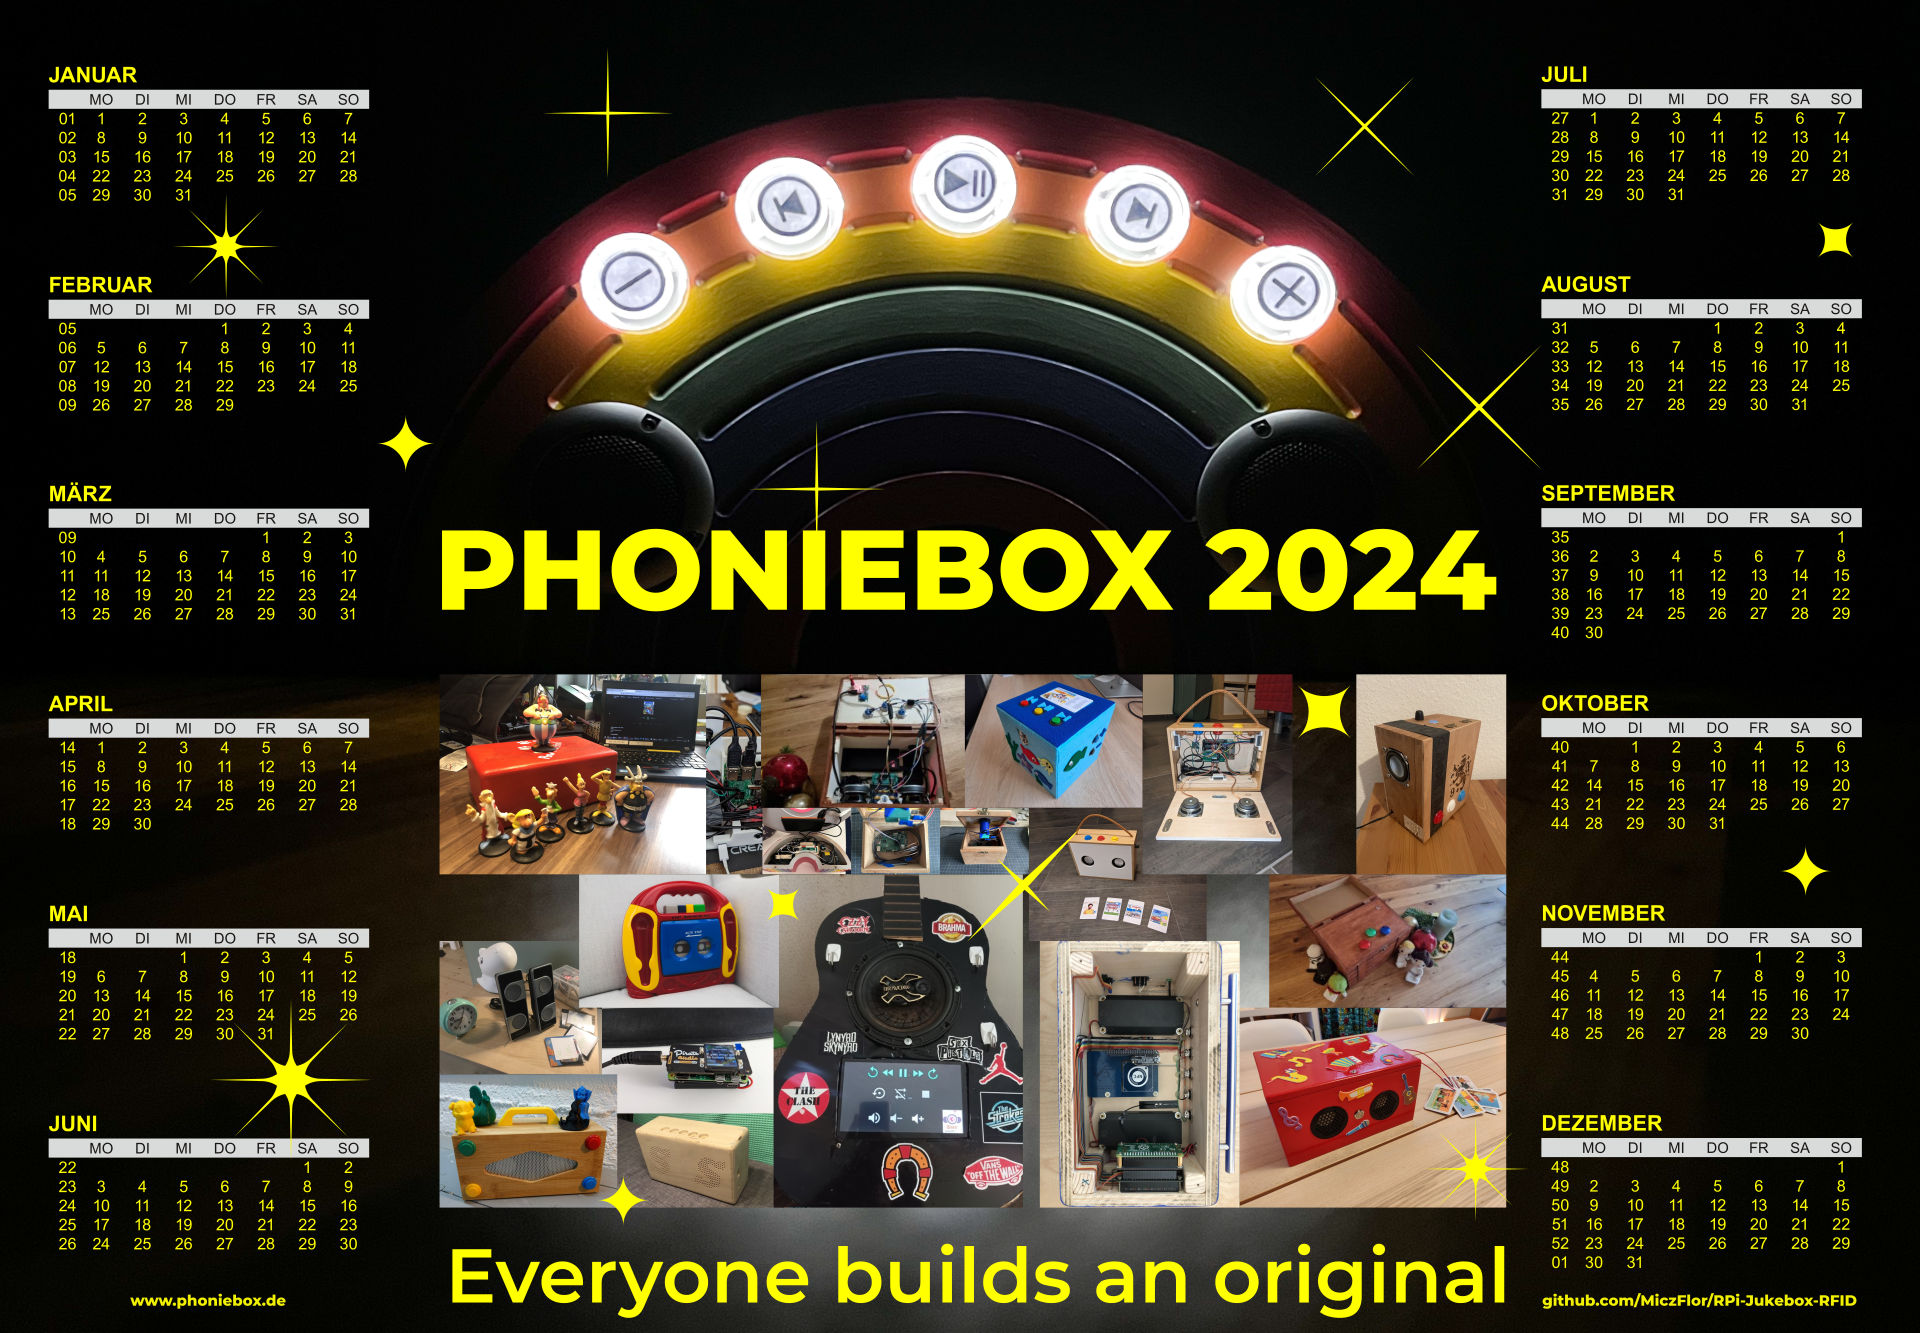 The Phoniebox Calendar